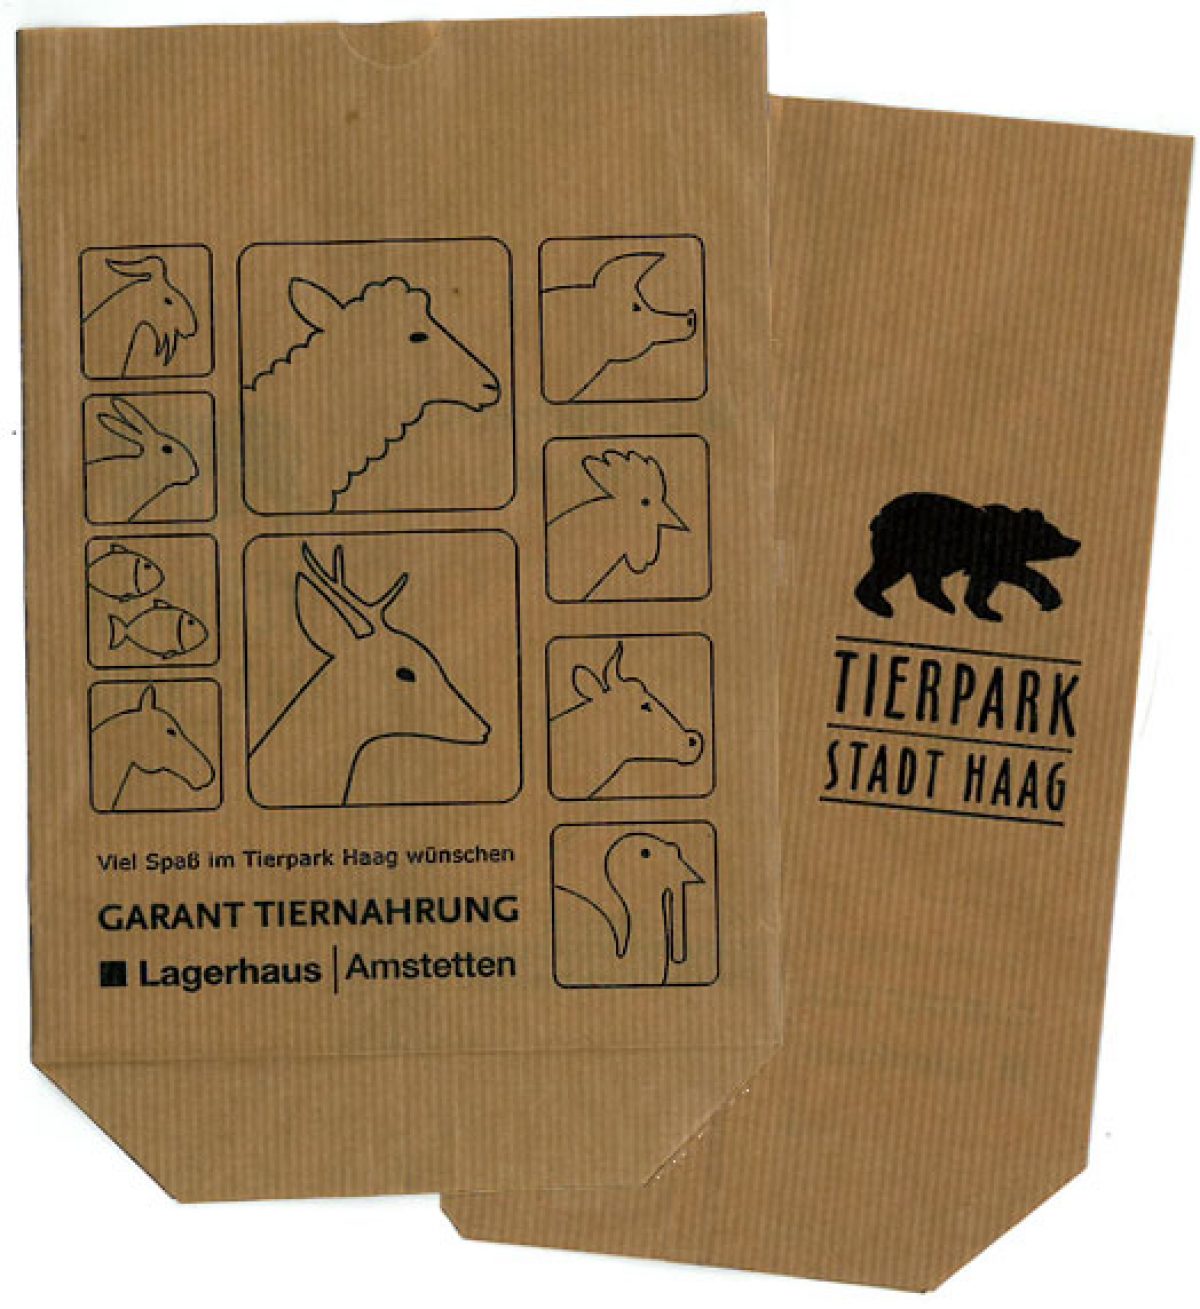 Futtersackerl / animal feed bag